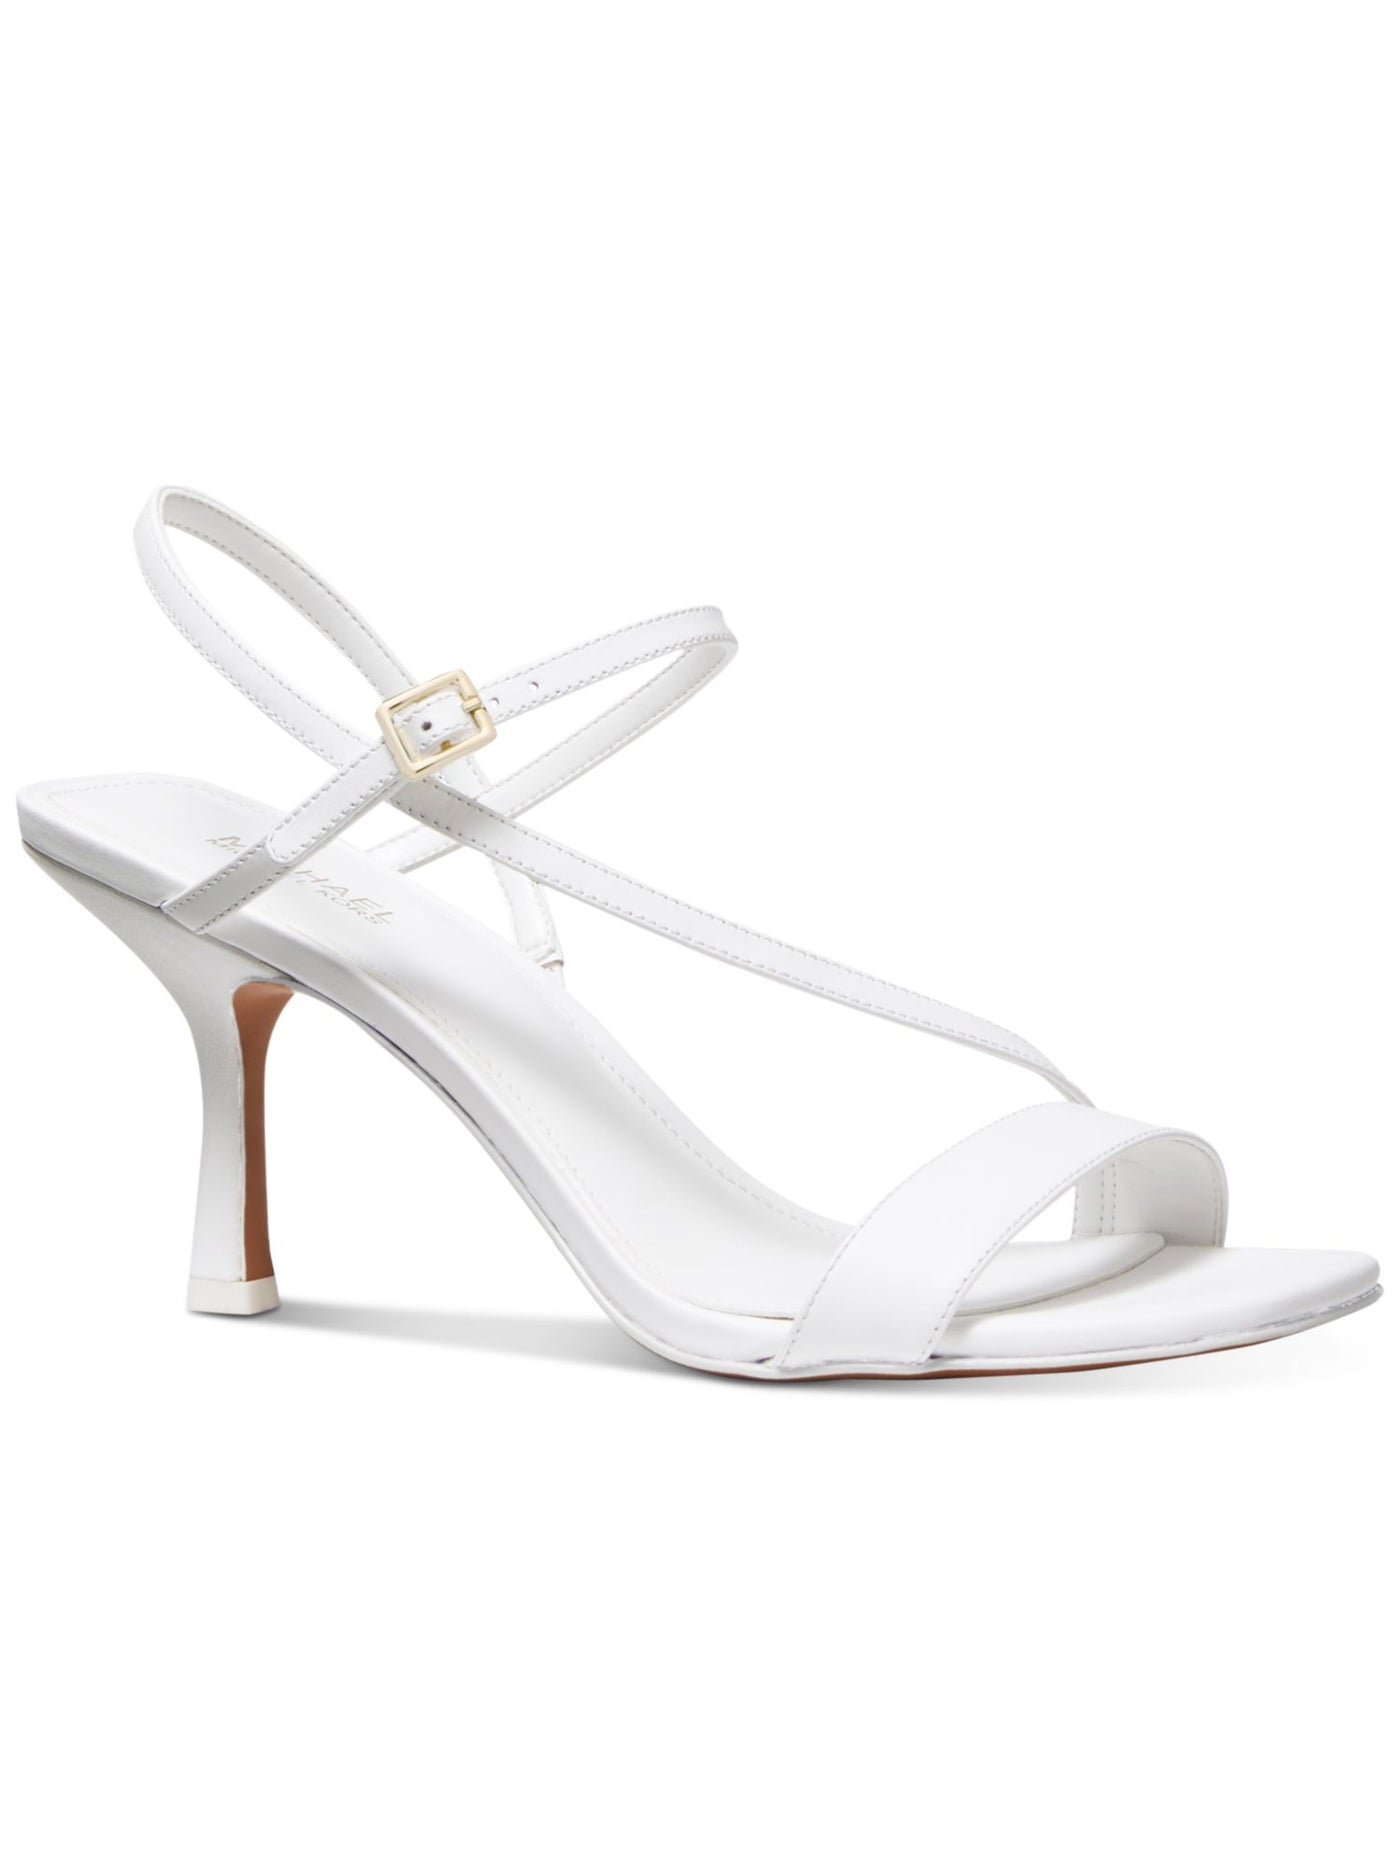 MICHAEL KORS Womens White Strappy Asymmetrical Padded Tasha Square Toe Stiletto Buckle Leather Dress Slingback Sandal 5.5 M